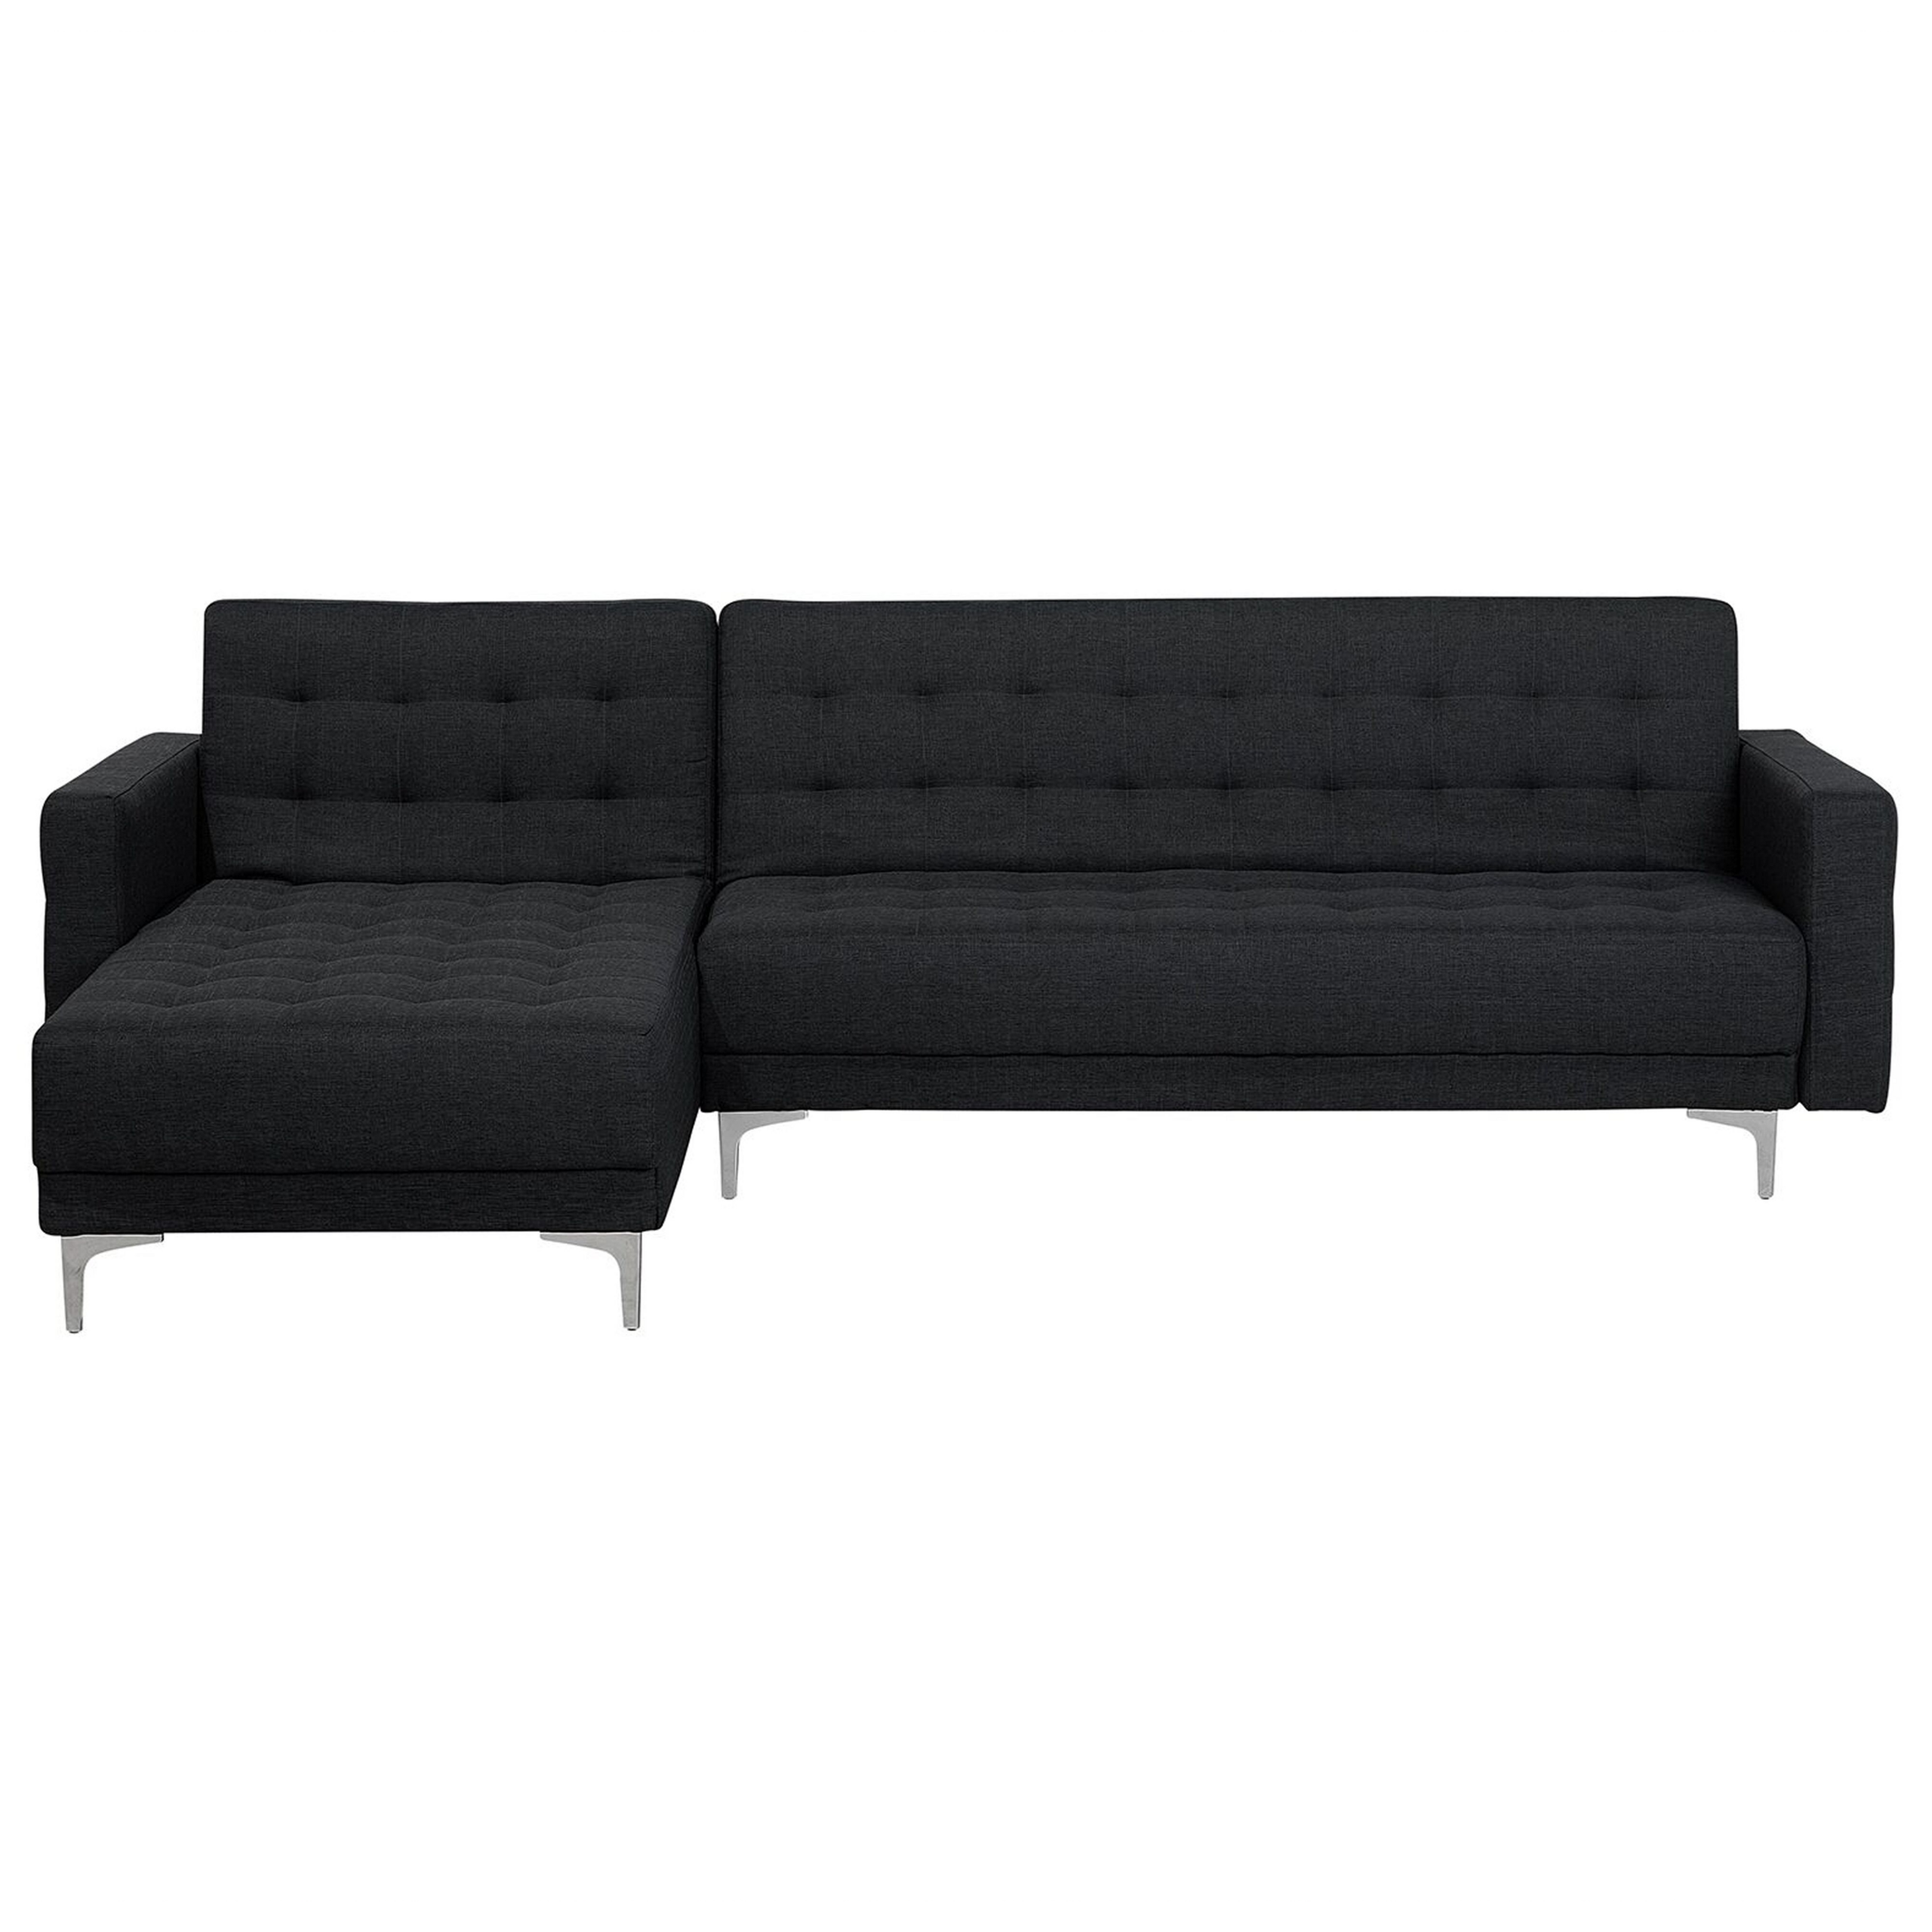 Beliani Corner Sofa Bed Graphite Grey Tufted Fabric Modern L-Shaped Modular 4 Seater Right Hand Chaise Longue